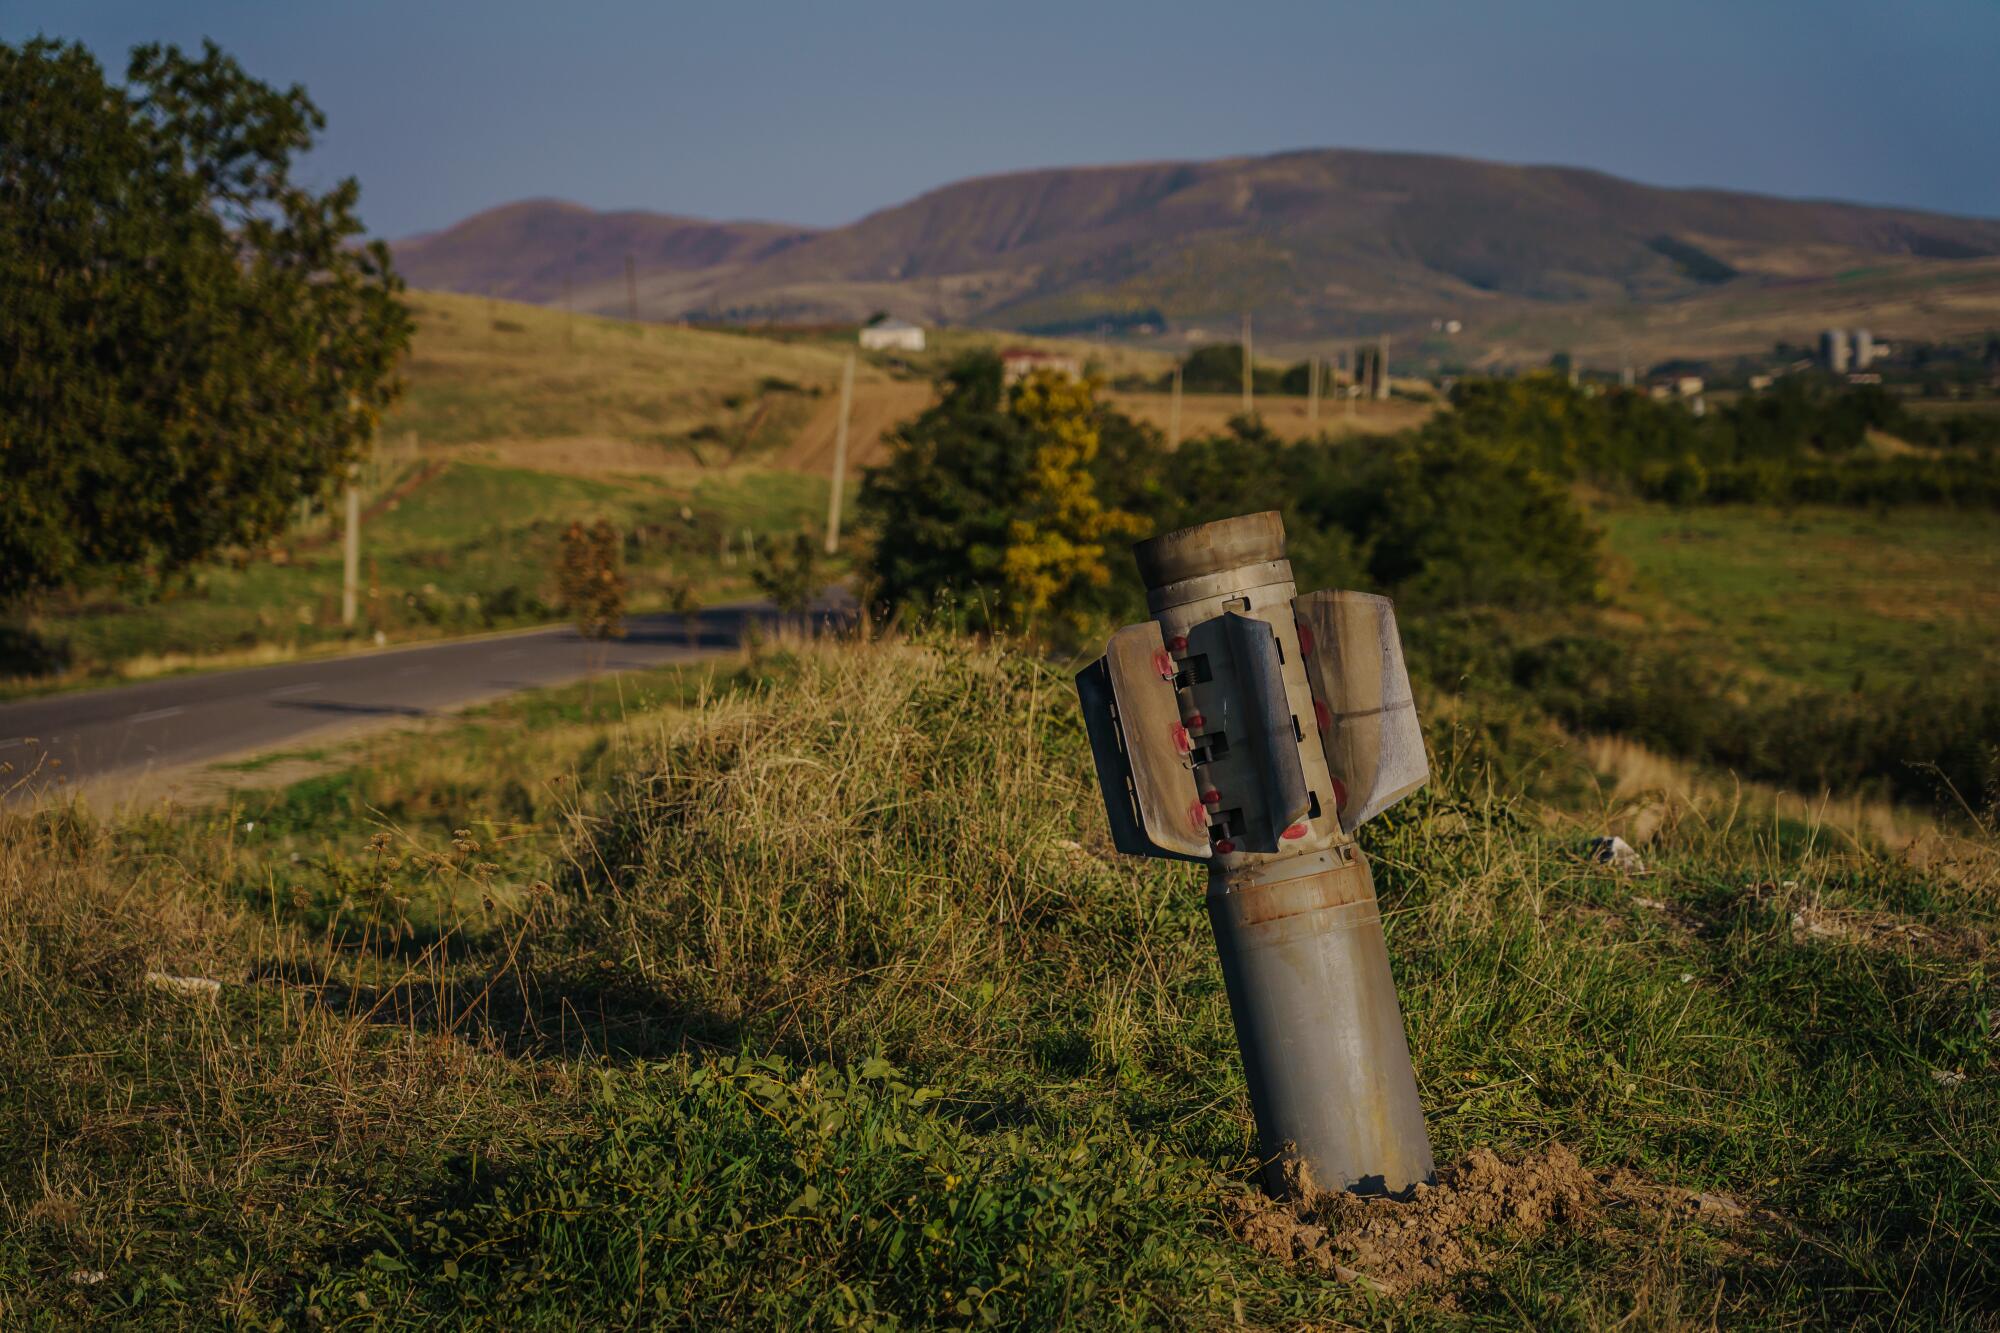 A large Azerbaijan missile hits the ground outside Martuni, Nagorno-Karabakh.